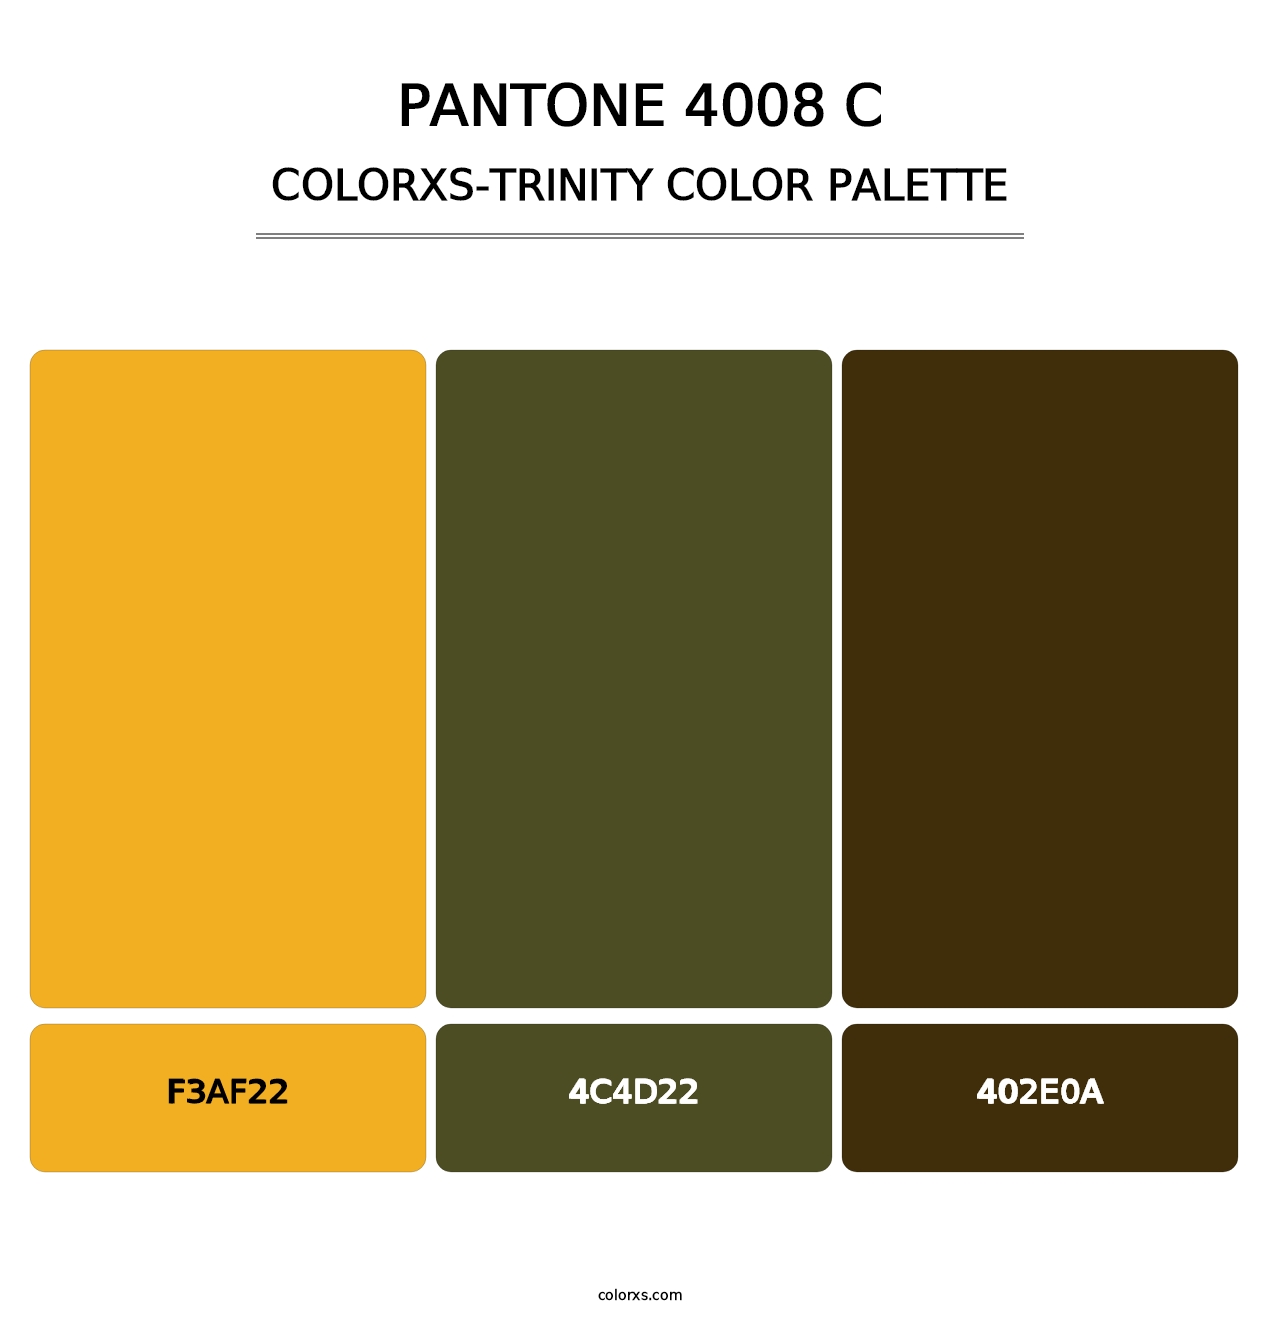 PANTONE 4008 C - Colorxs Trinity Palette